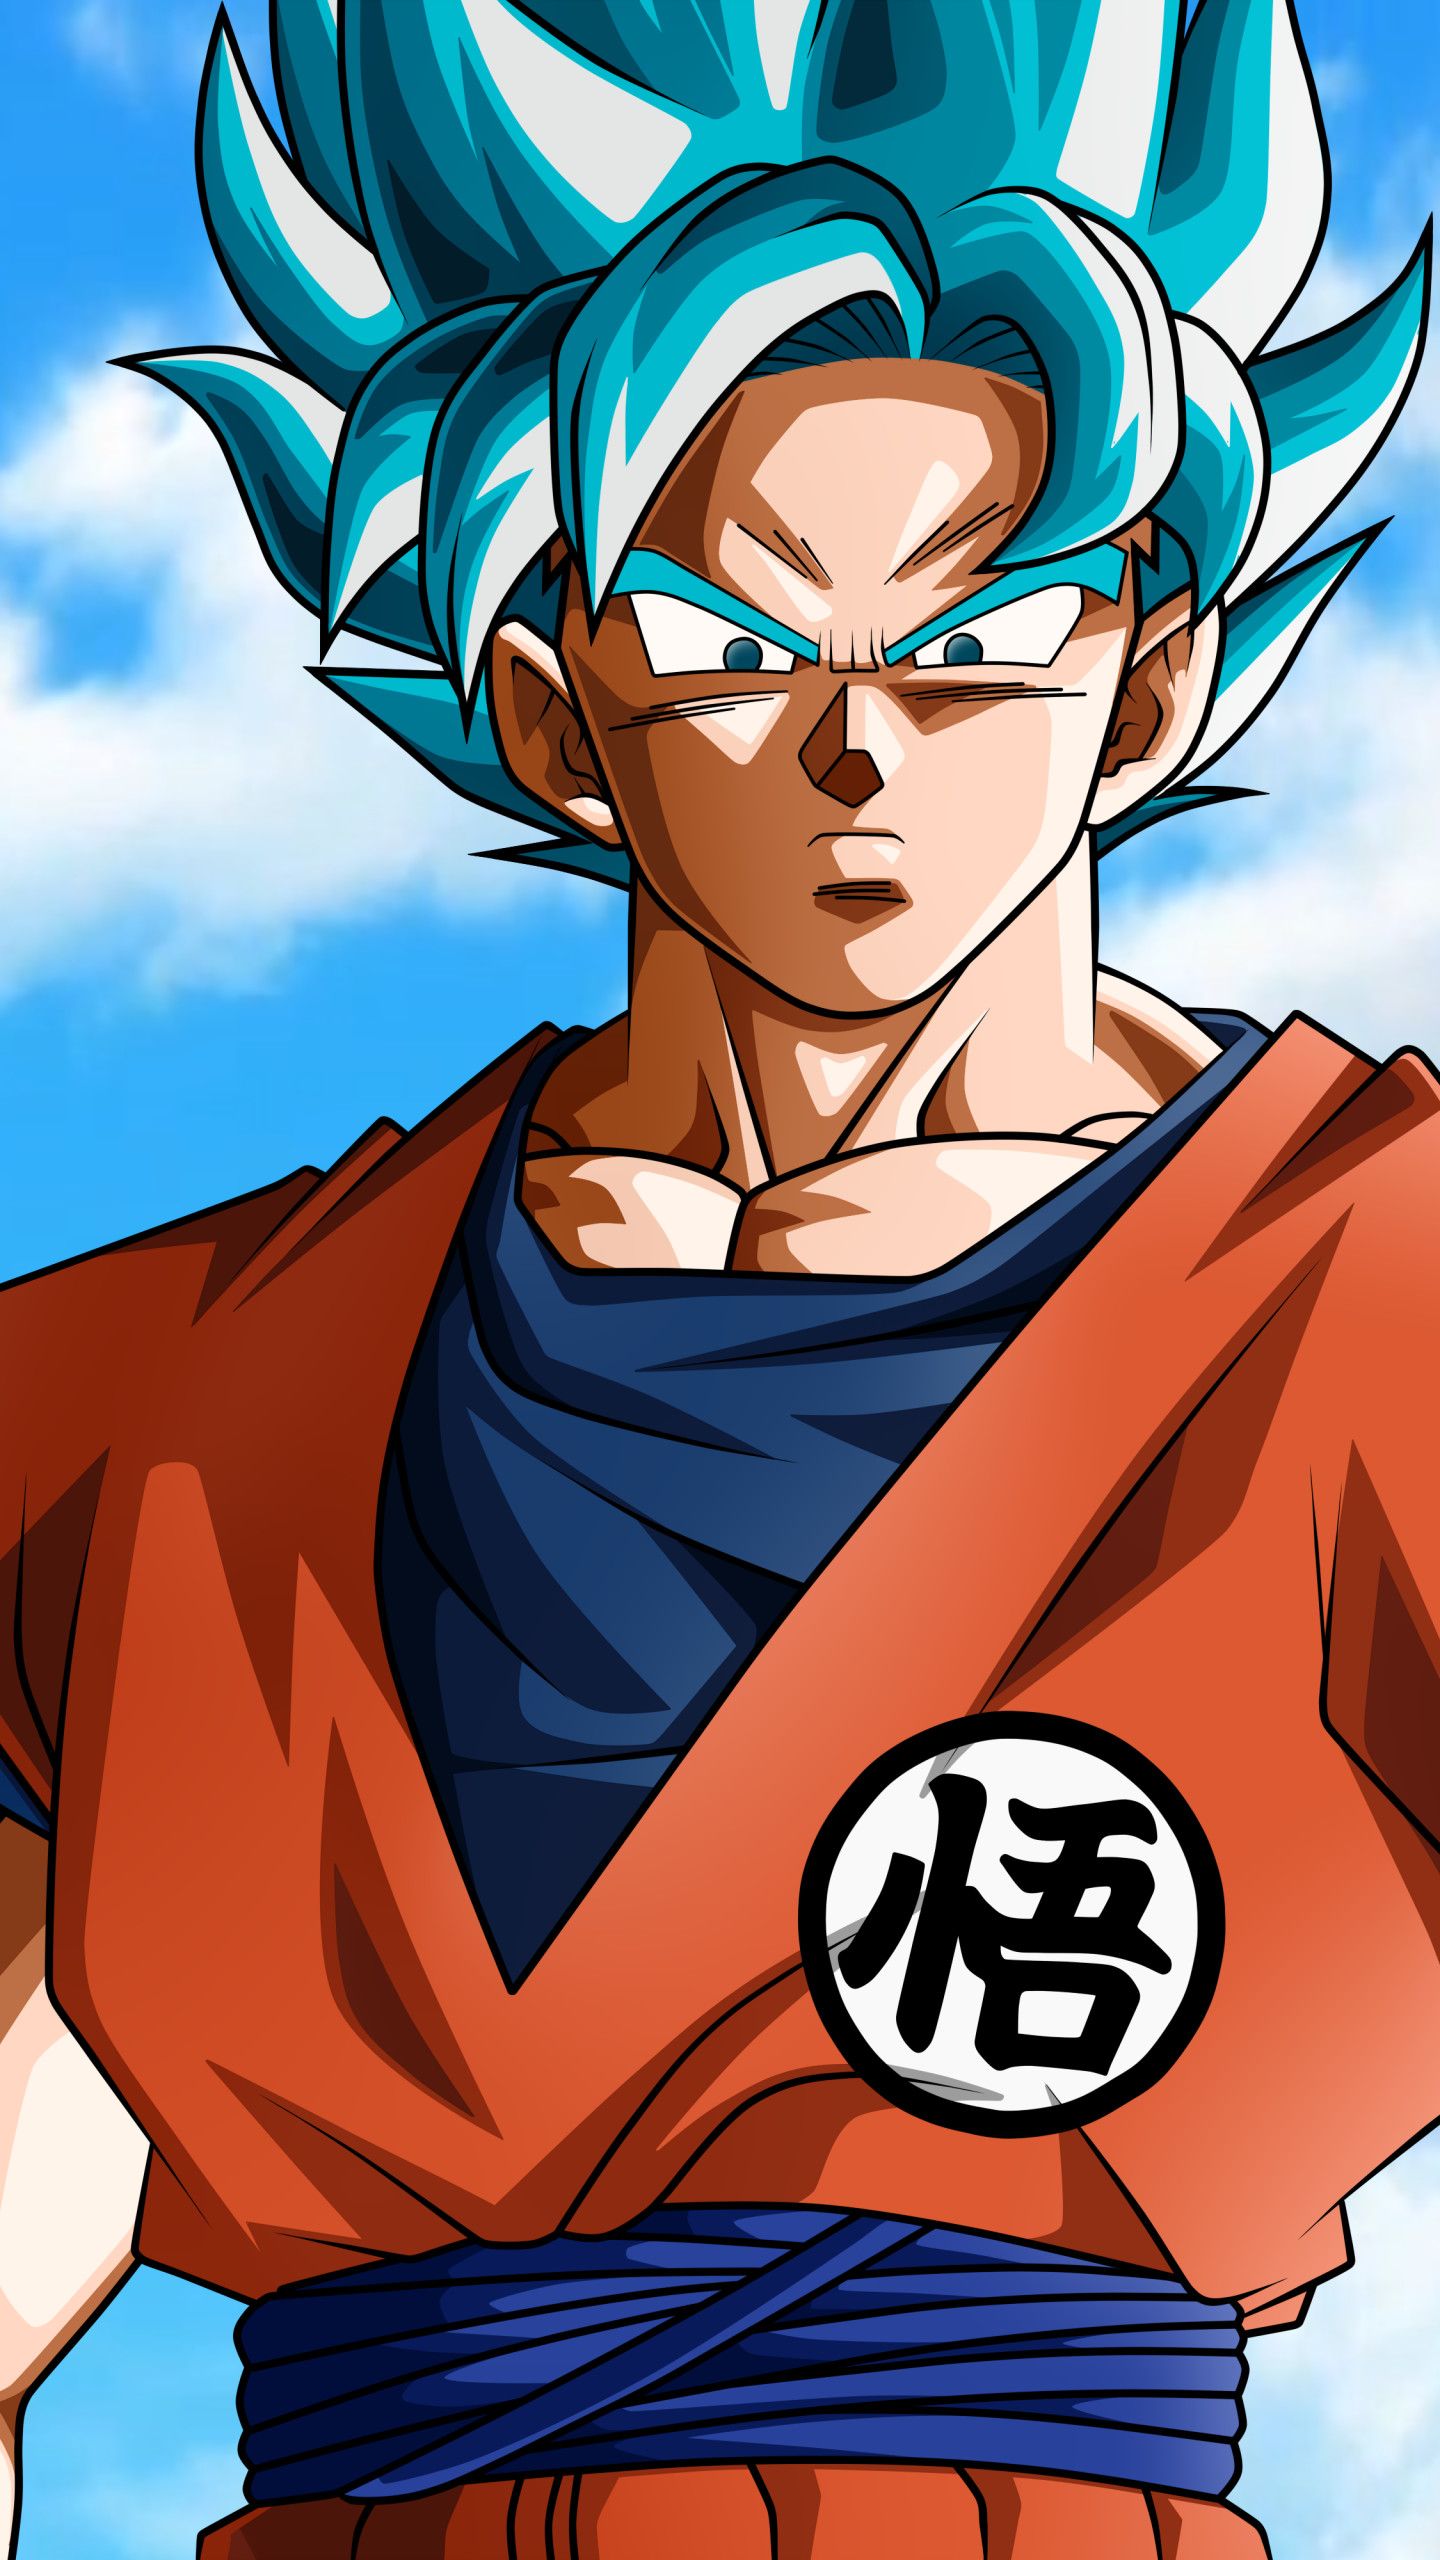 Goku Live Wallpaper Iphone 6s Anime Cartoon Dragon Ball Fictional Character Artwork Wallpaperuse